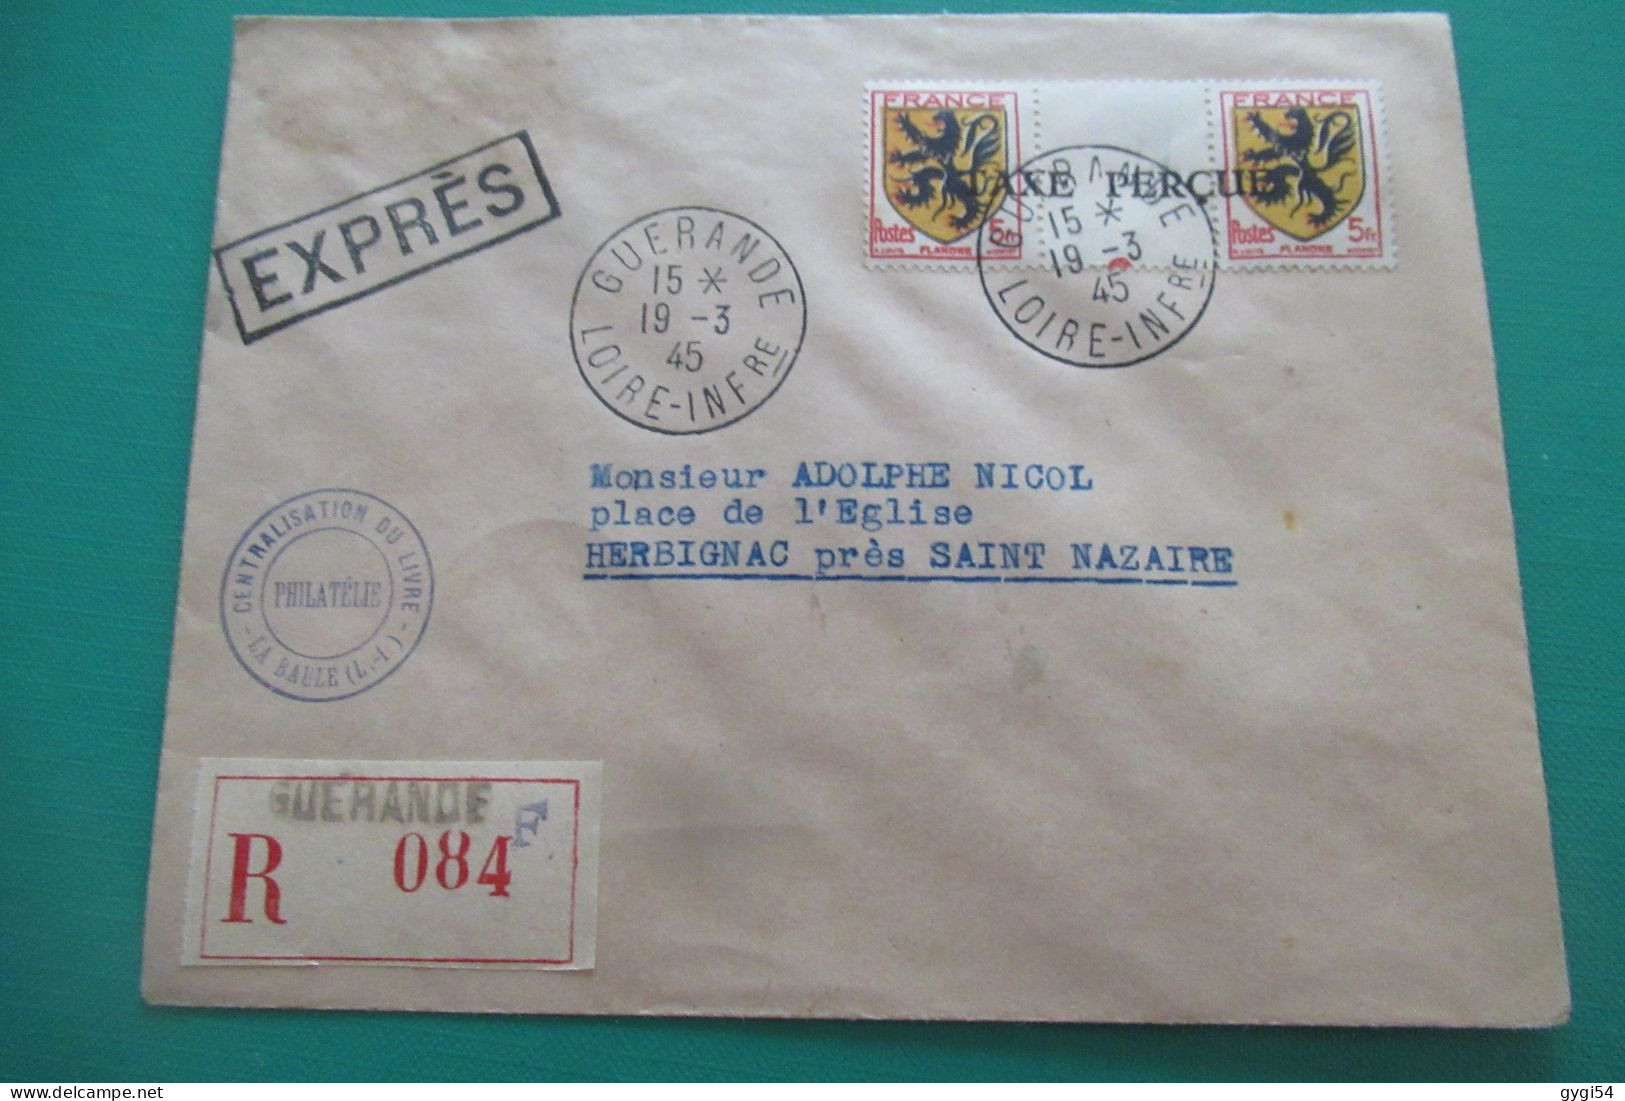 LIBERATION Lettre Recommandée En Expres  Taxe Perçue  GUERANDE 19 03 1945 - Befreiung